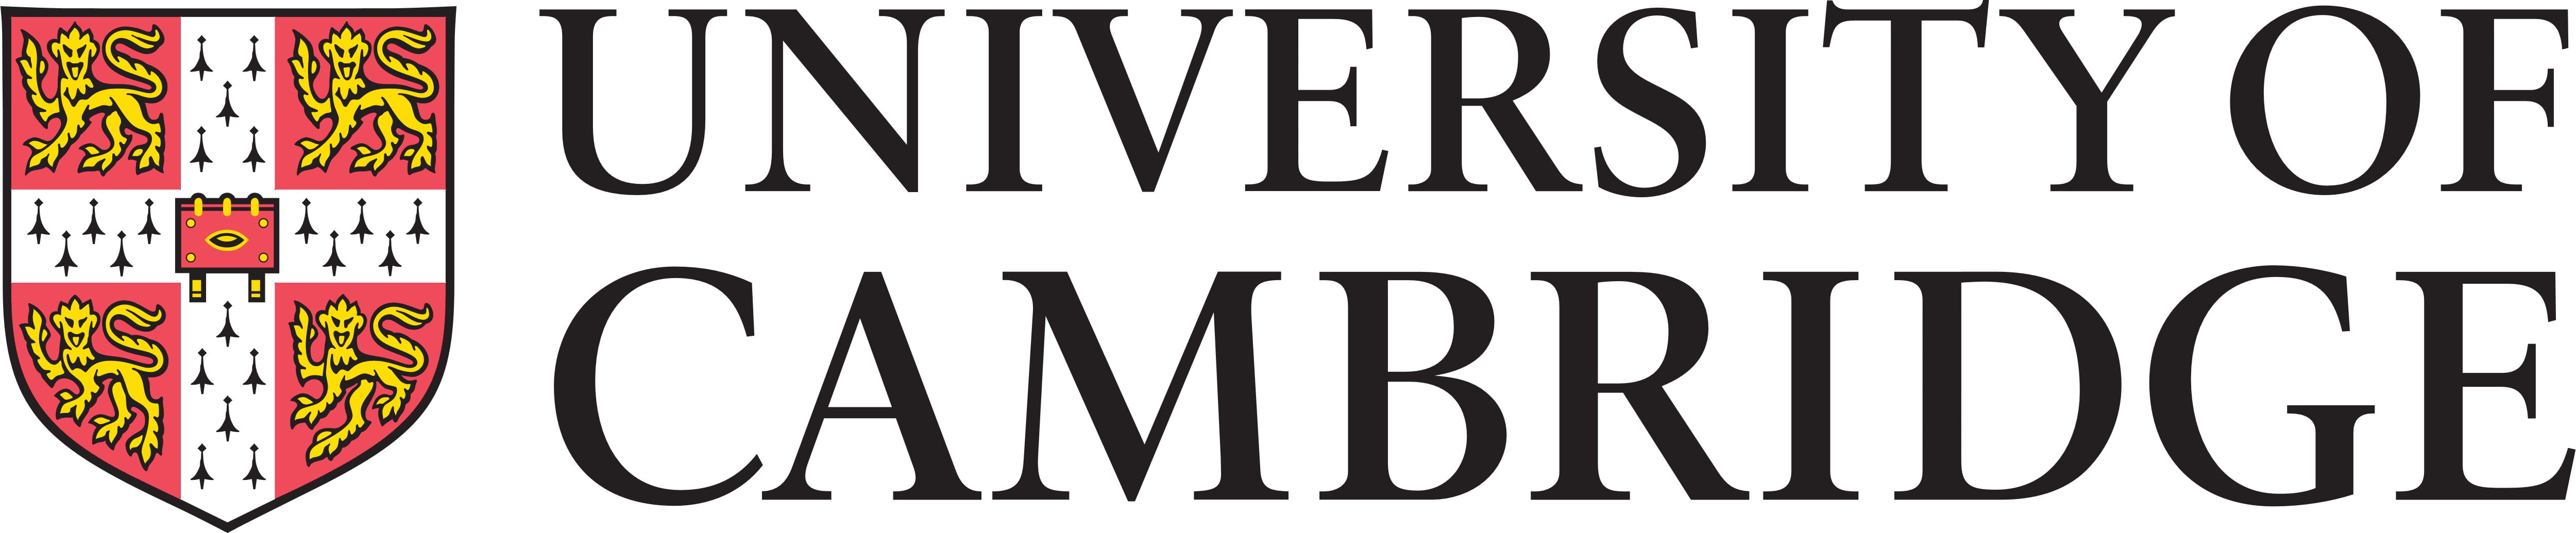 University_of_Cambridge_logo_logotype